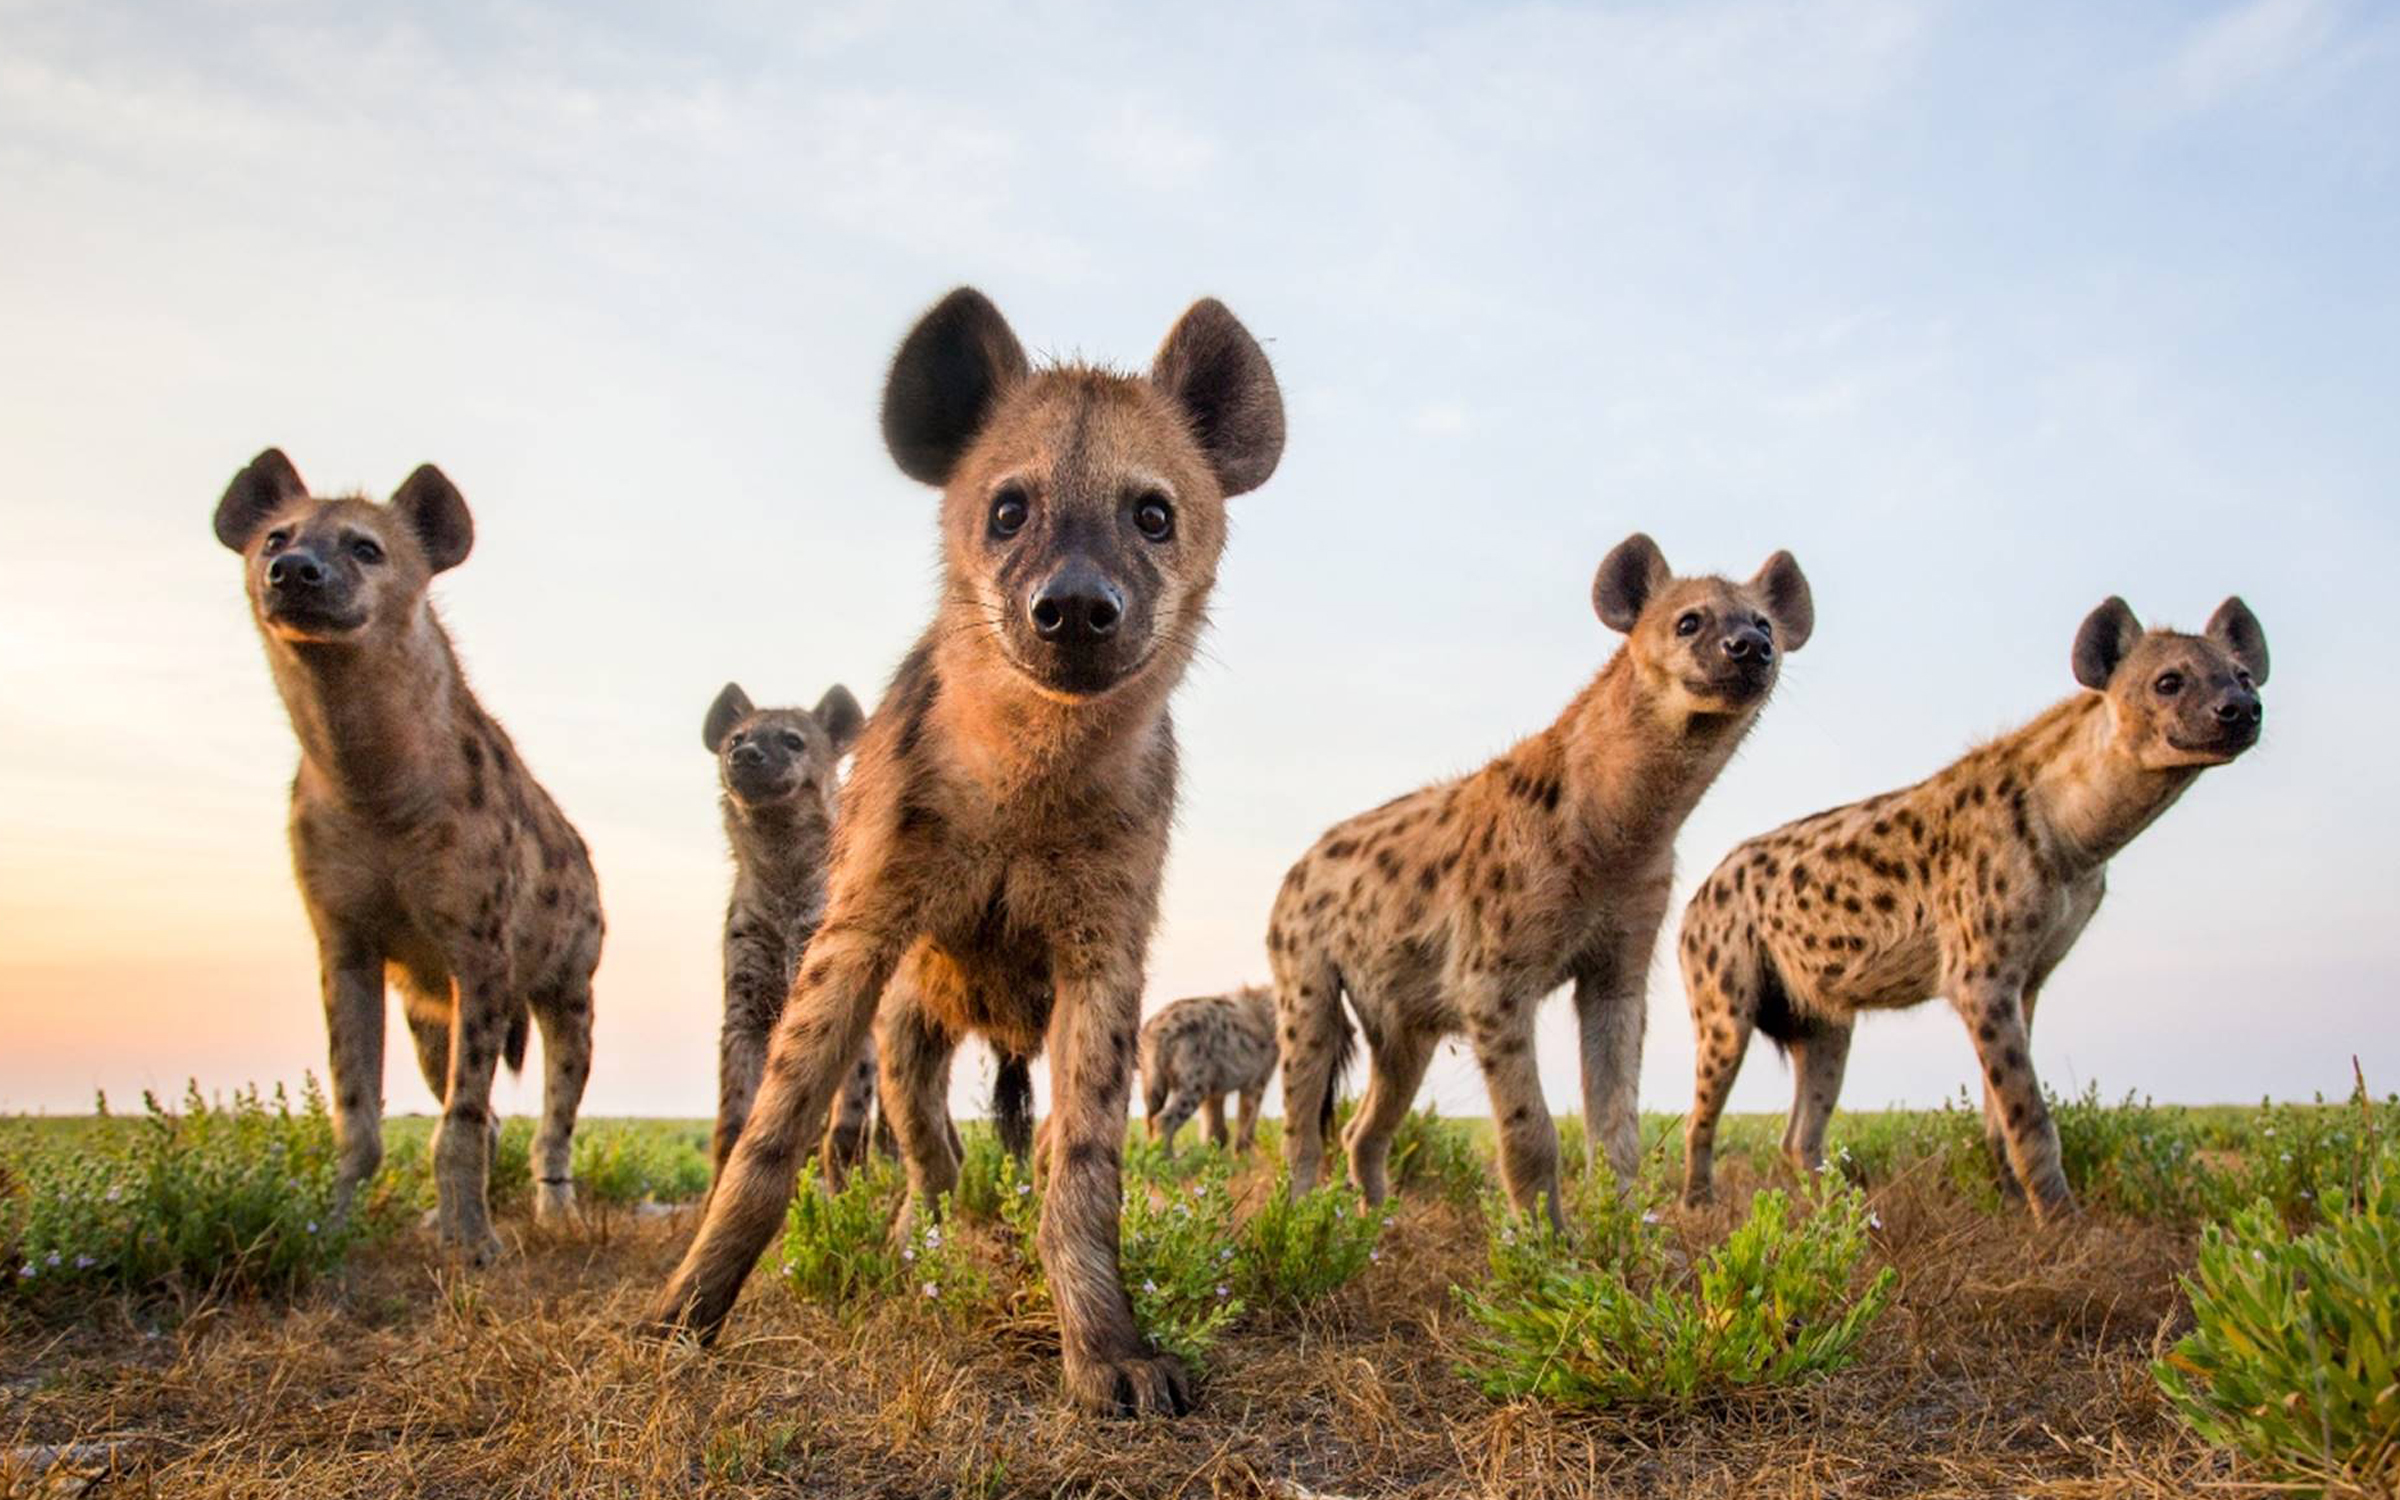 Spotted hyenas on the Zambia Walking Safari by Ker & Downey